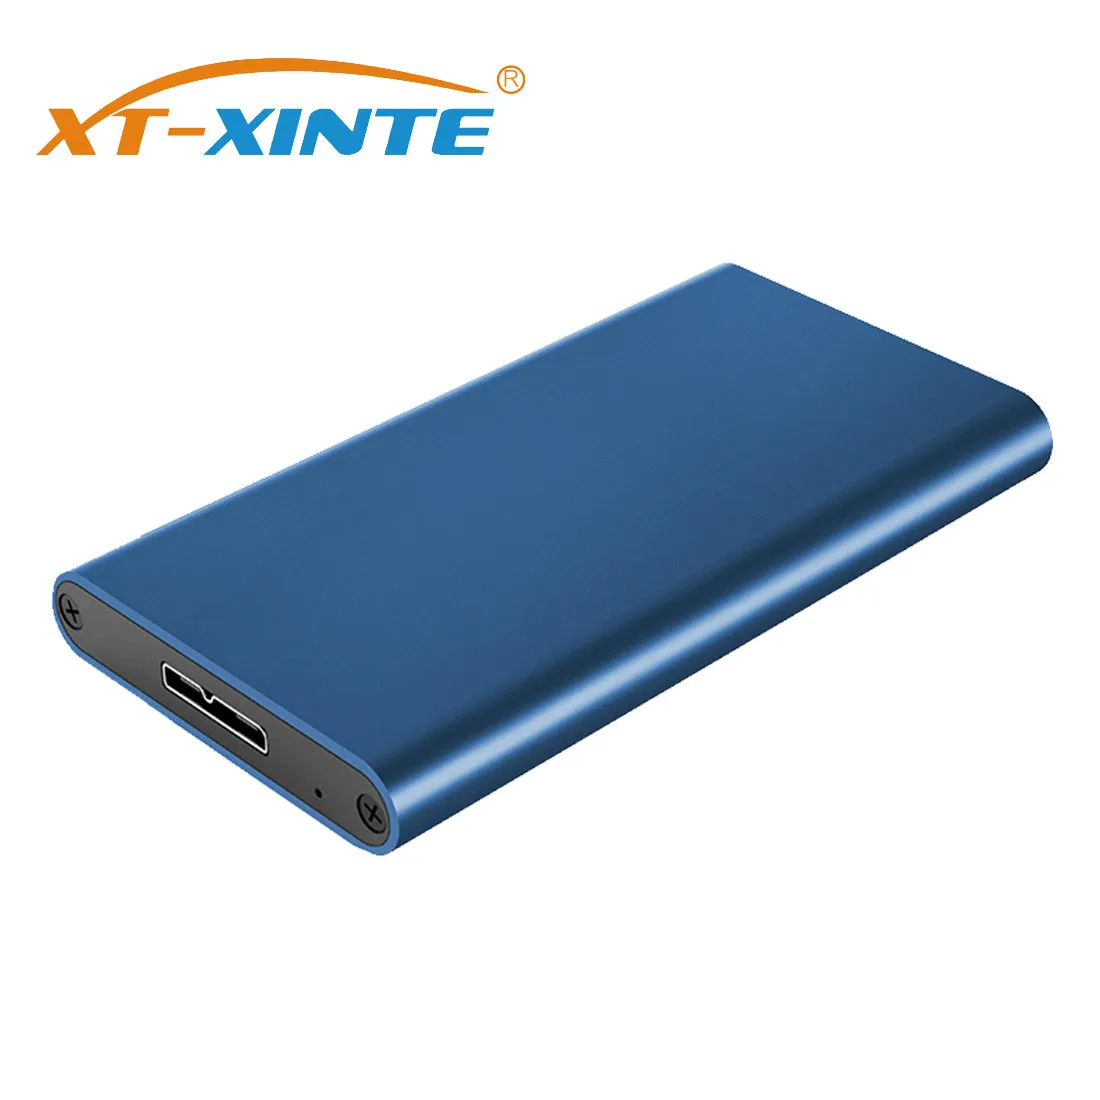 XT-XINTE External Enclosure Hard Drive Mini mSATA to USB 3.0 HDD Hard Drive Adapter Case For mSATA SSD Case Box